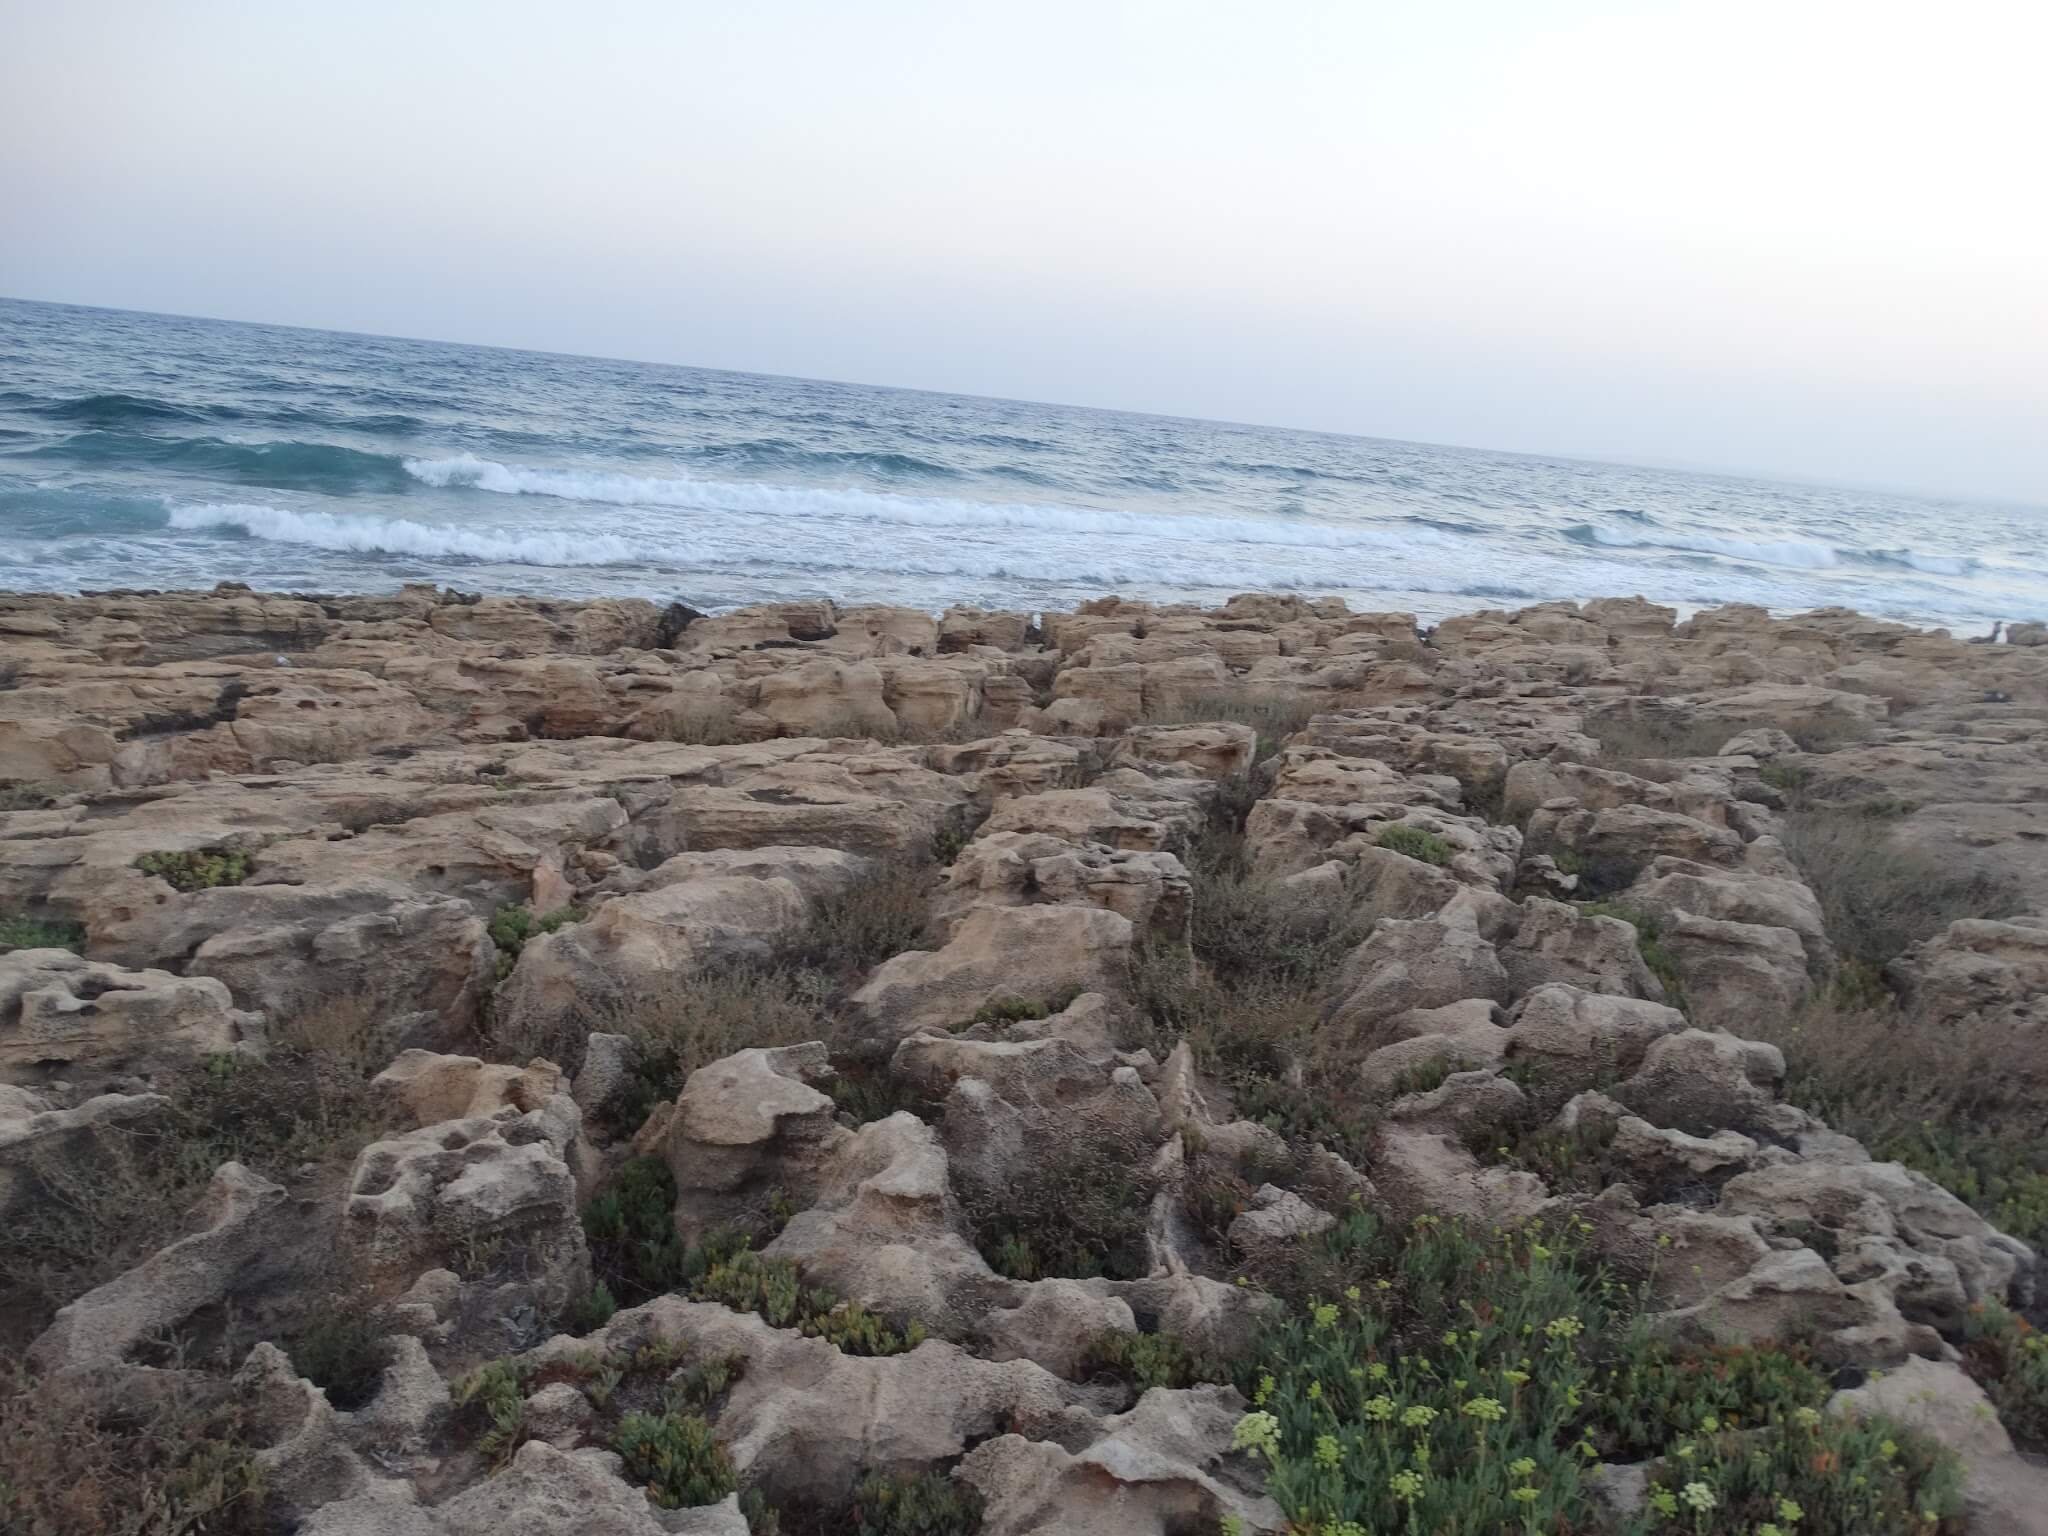 Stony beach in Cyprus